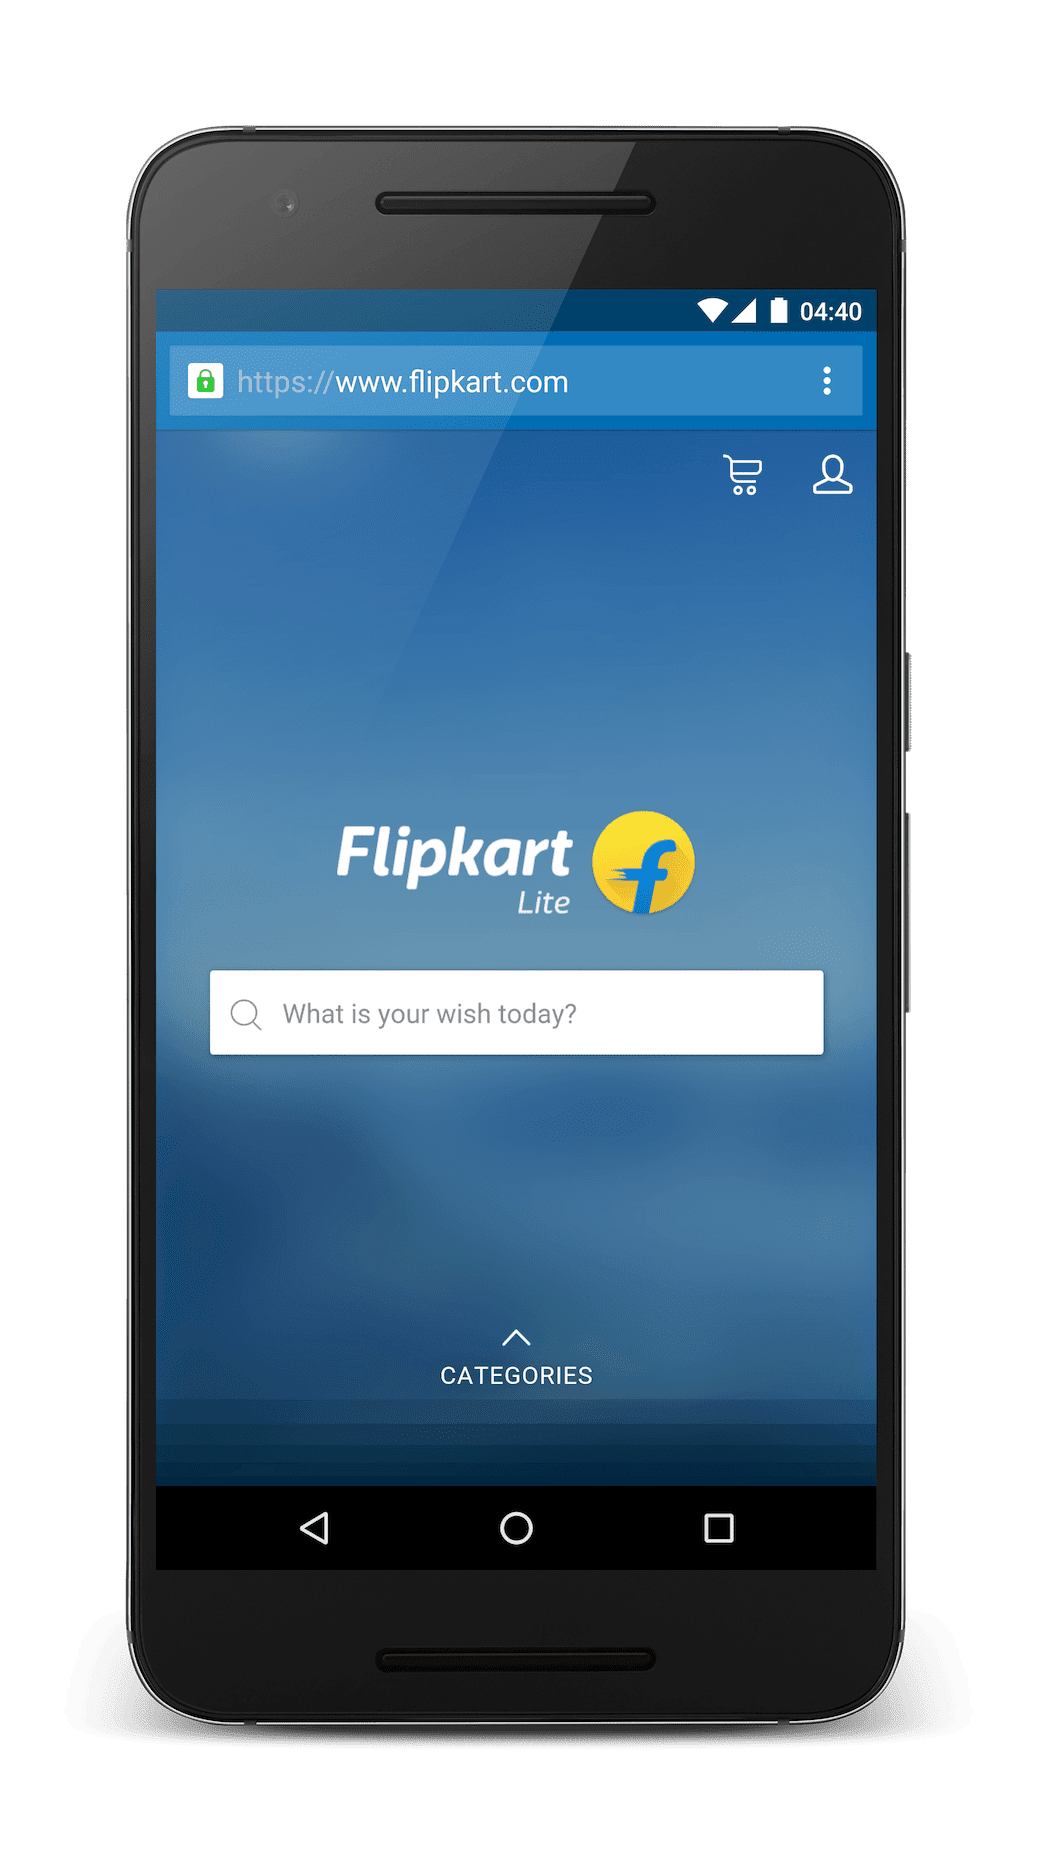 Sitio de Flipkart